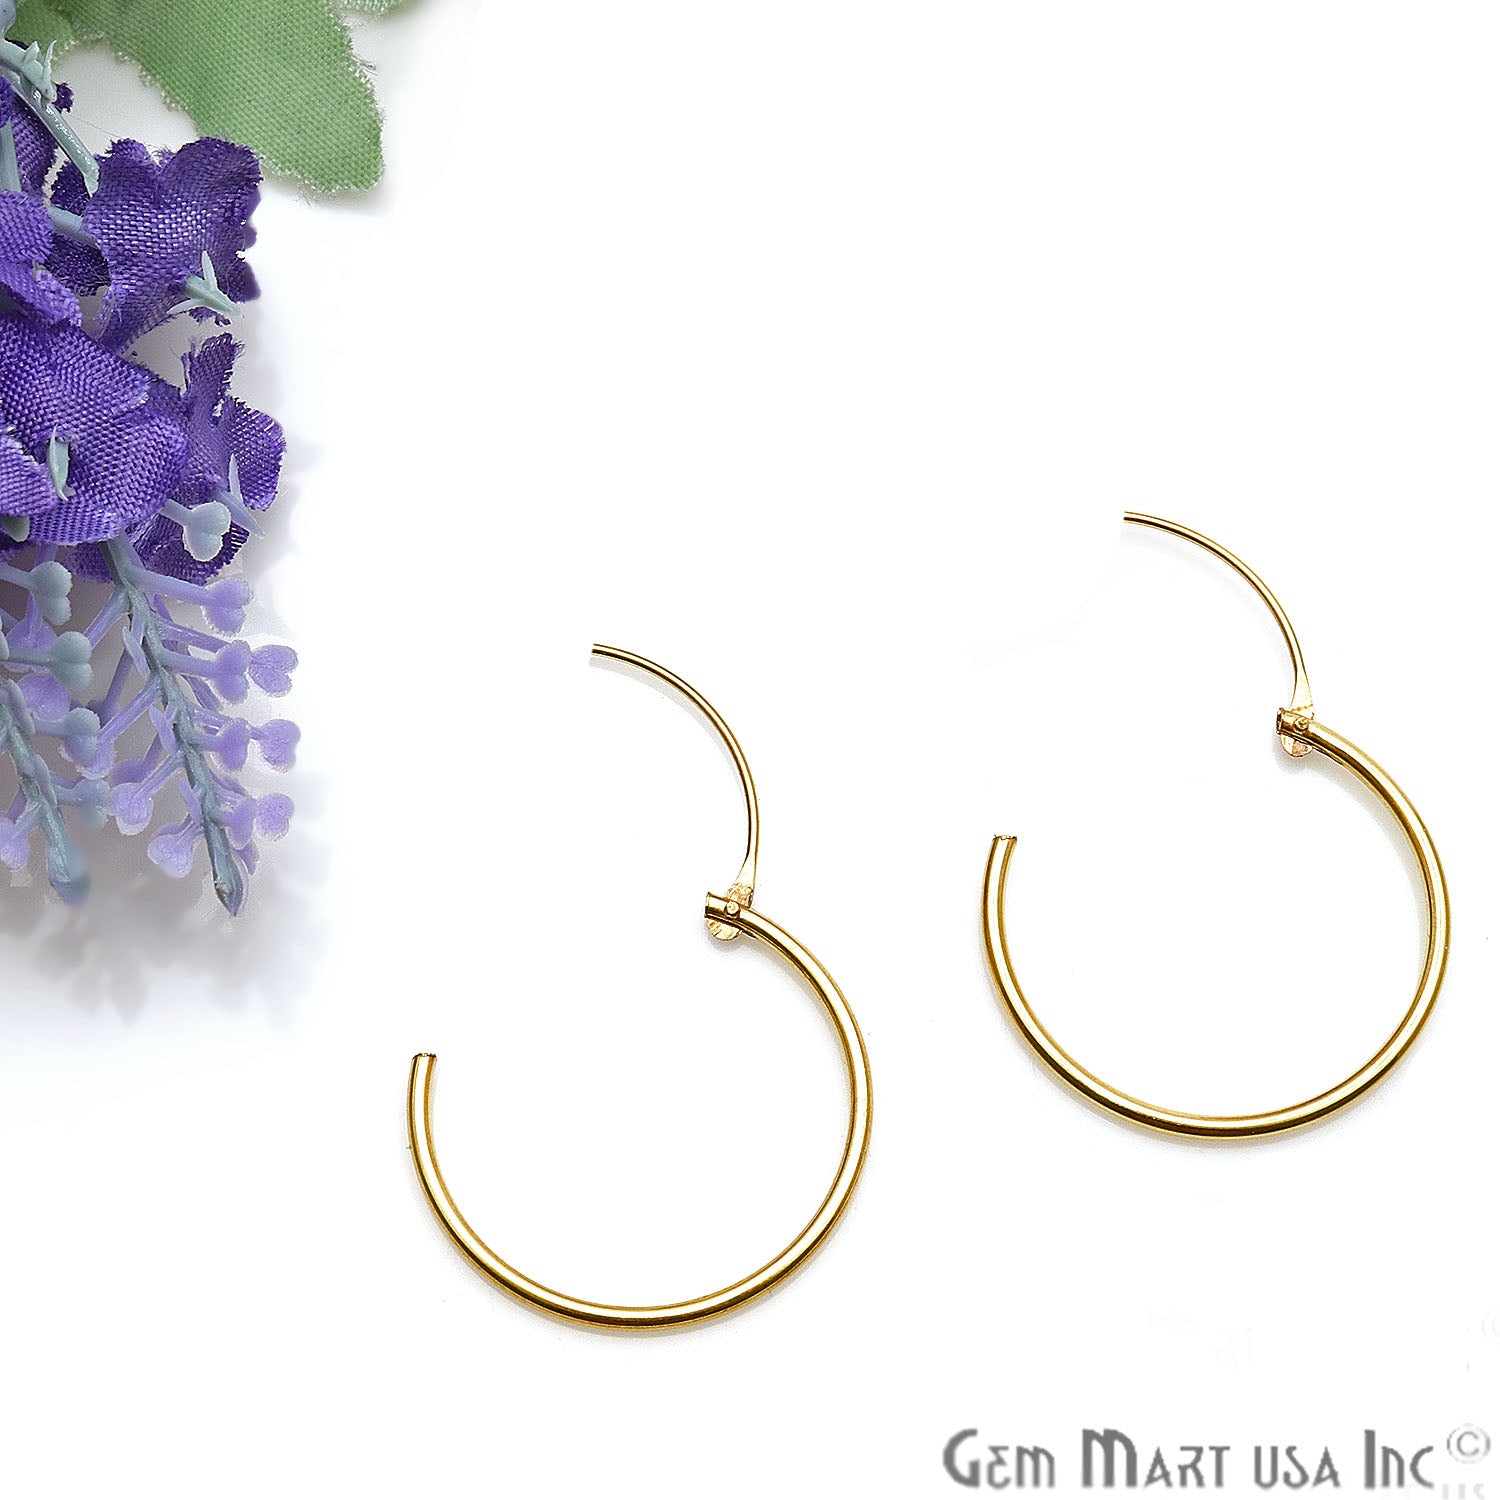 DIY Gold Plated Wire Finding Hoop Earring (Pick Hoop Size) - GemMartUSA